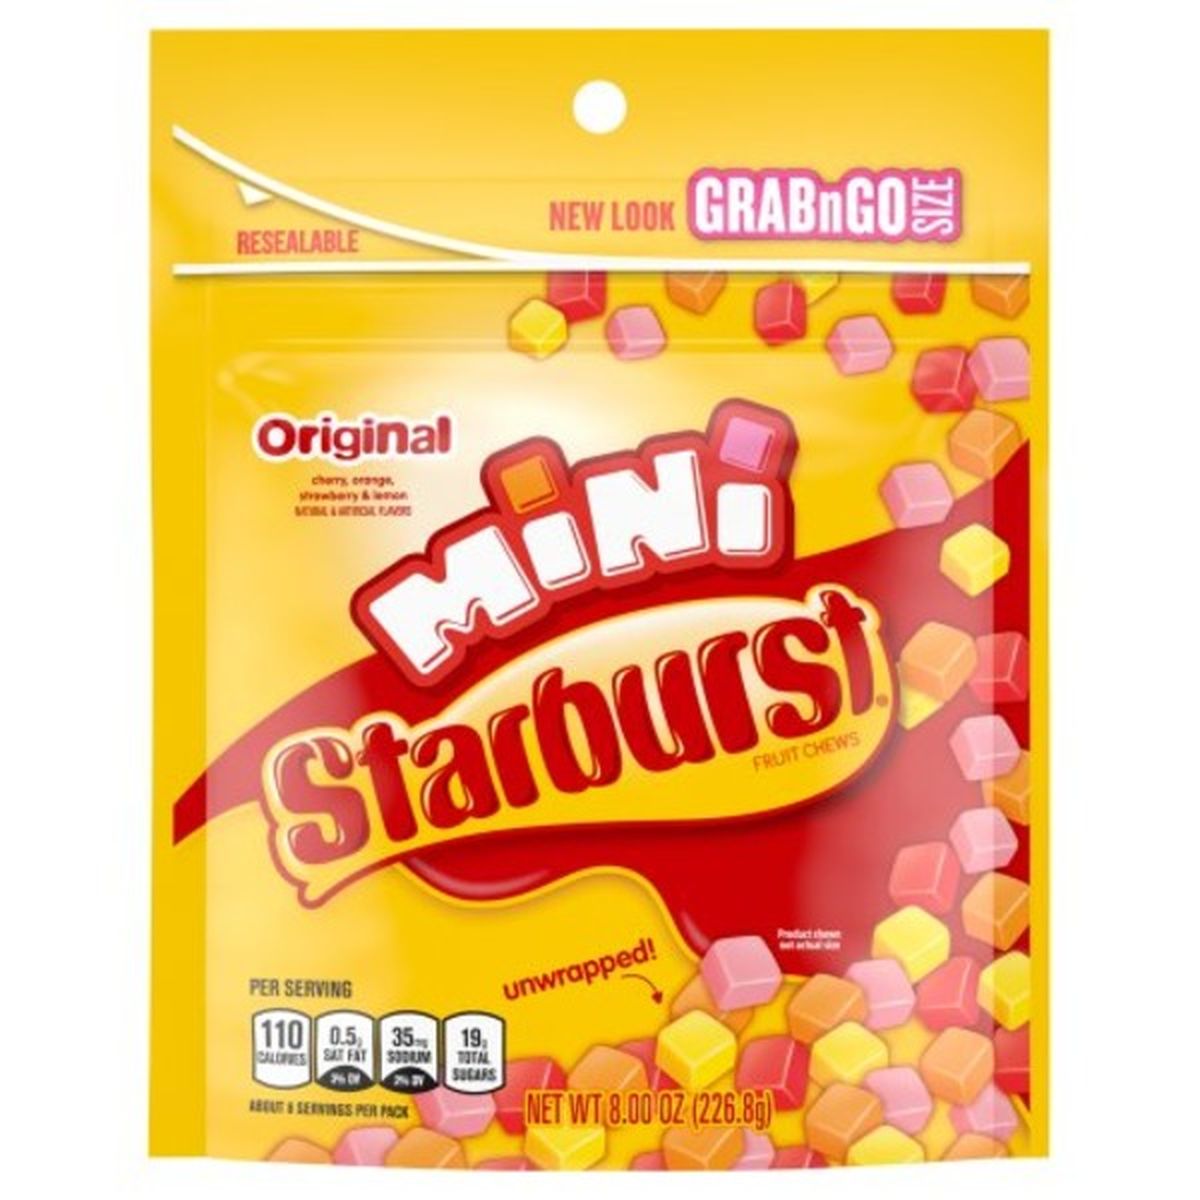 Calories in Starburst Original Minis Fruit Chews Candy